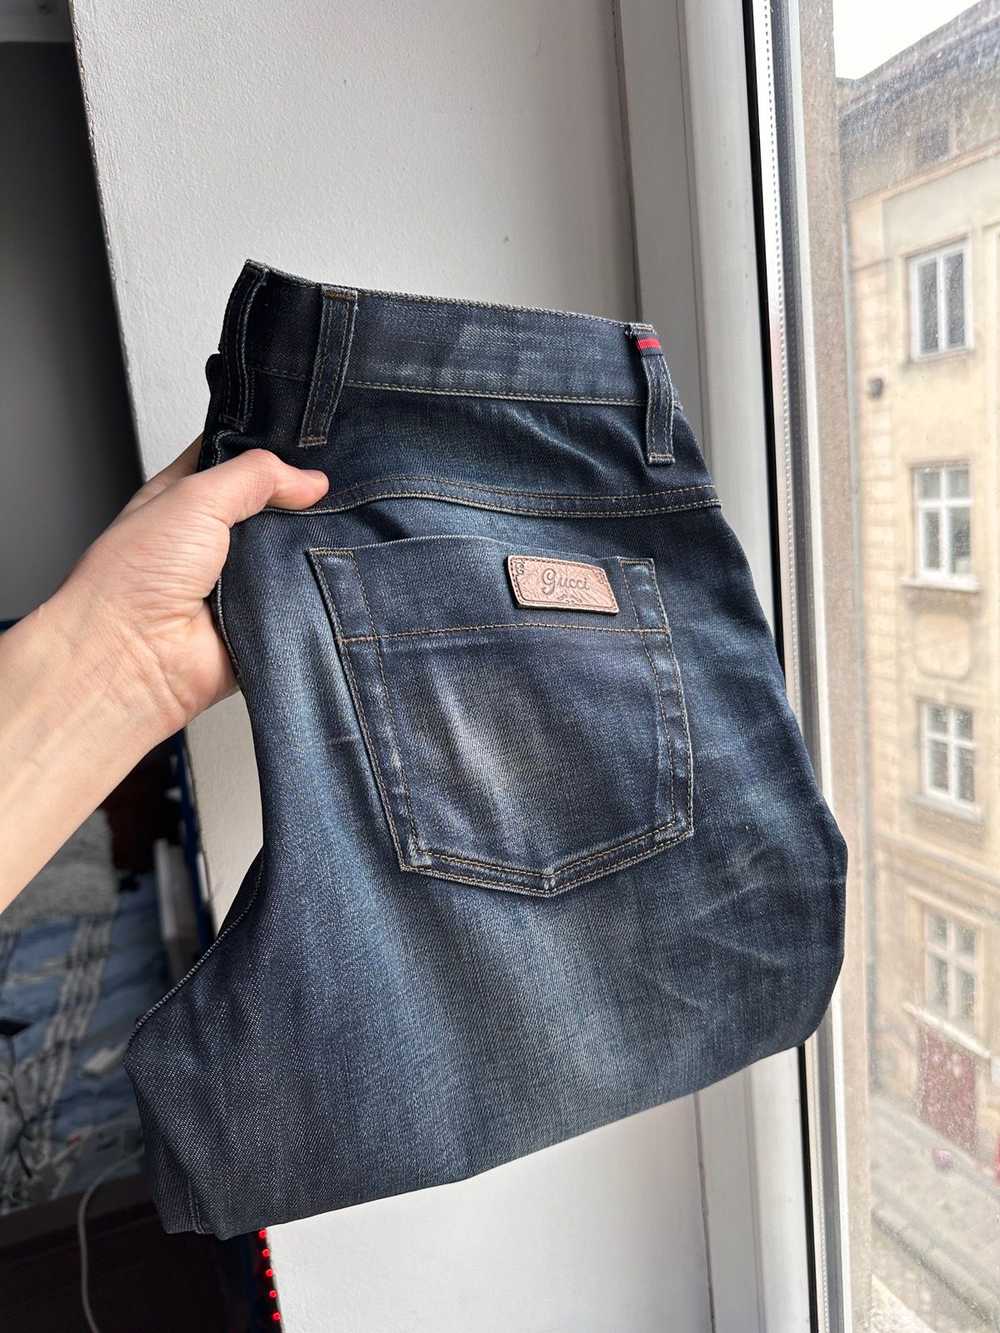 Gucci GUCCI denim LEATHER Logo Jeans Pants - image 2